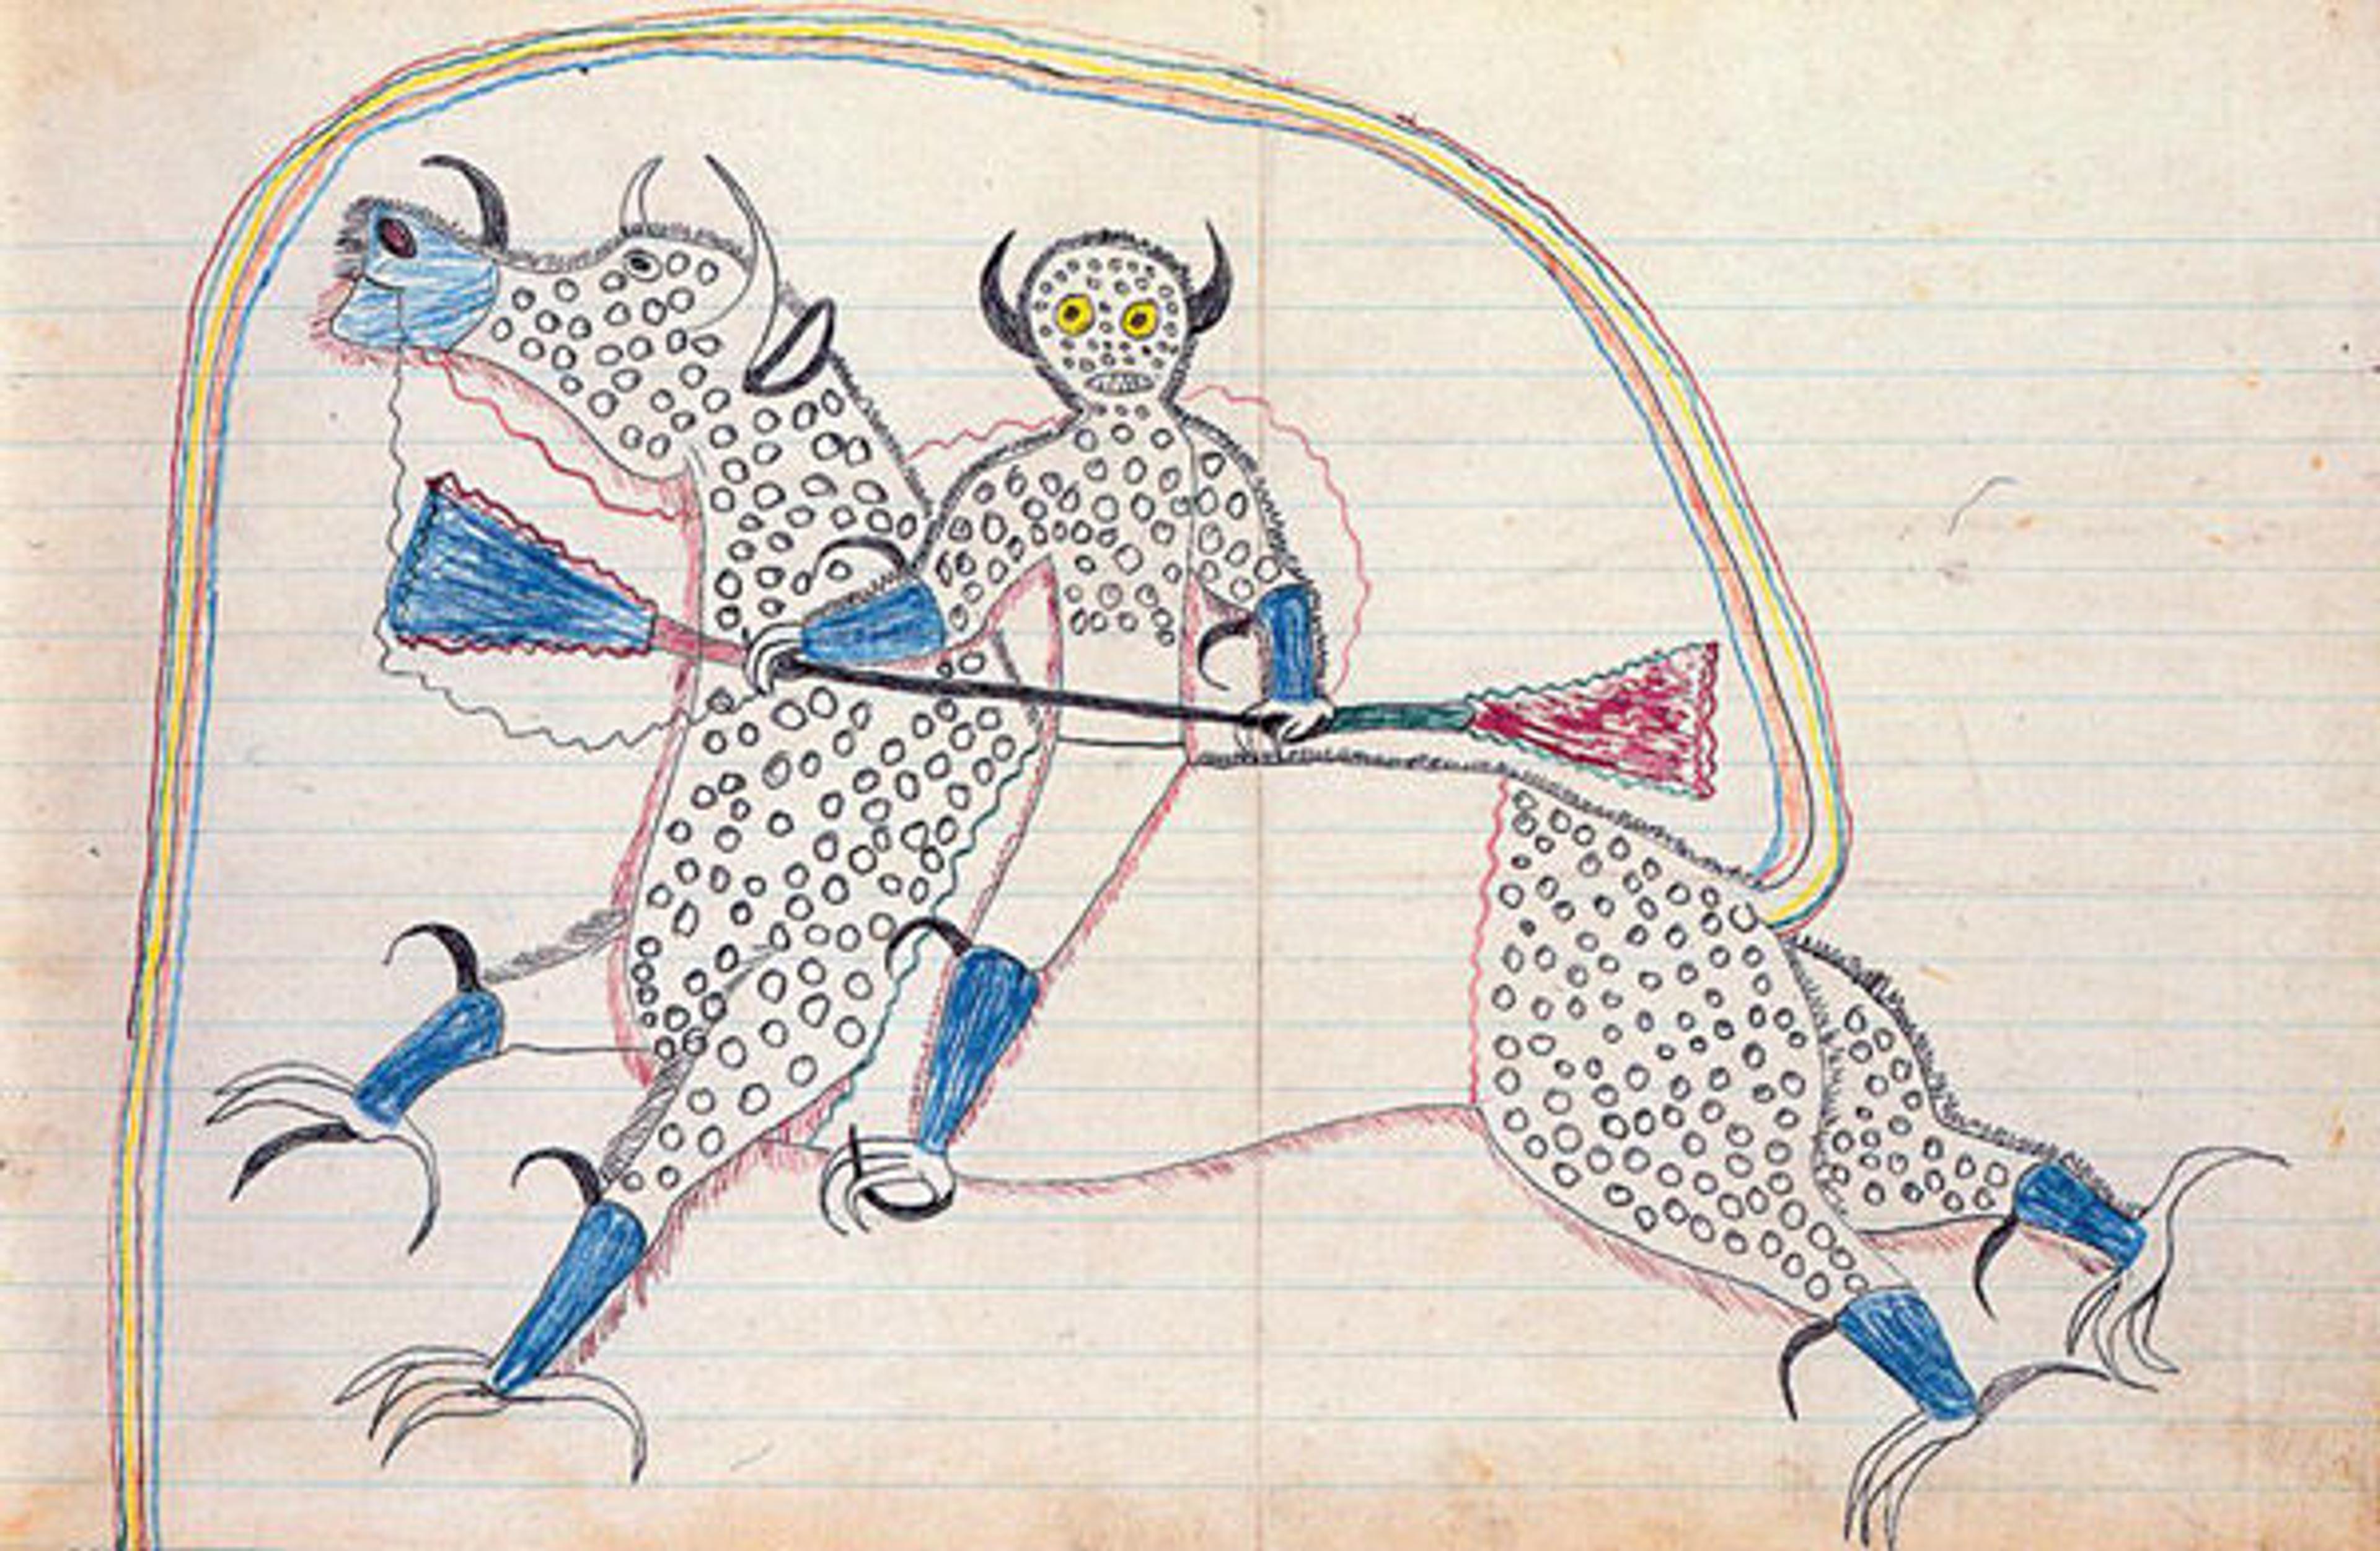 Ledger drawing of artist riding on a buffalo eagle